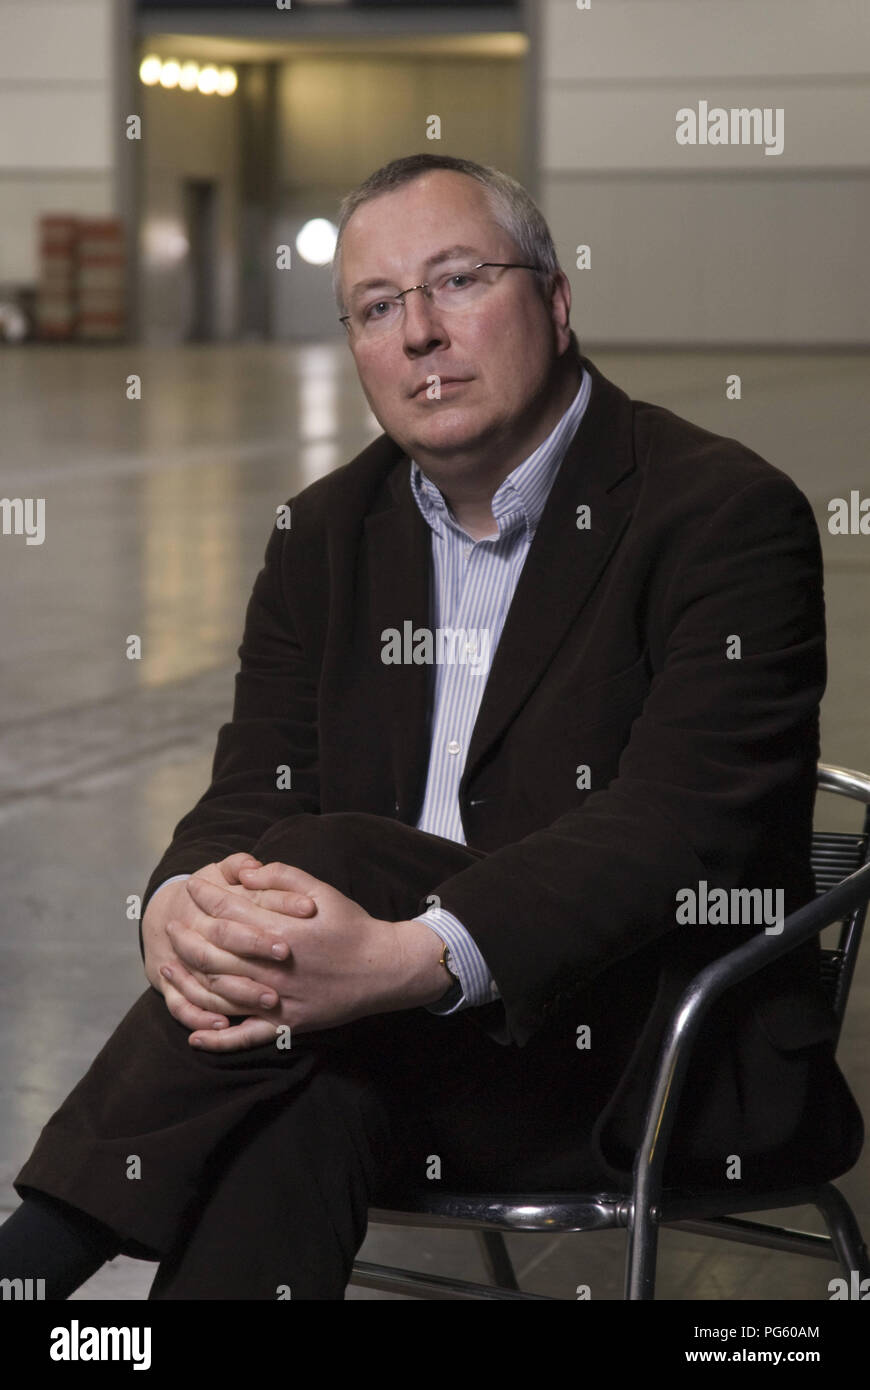 Leipzig, DEU, 19.03.2010: Portrait of Simon Winder, author and head of publicatio Stock Photo